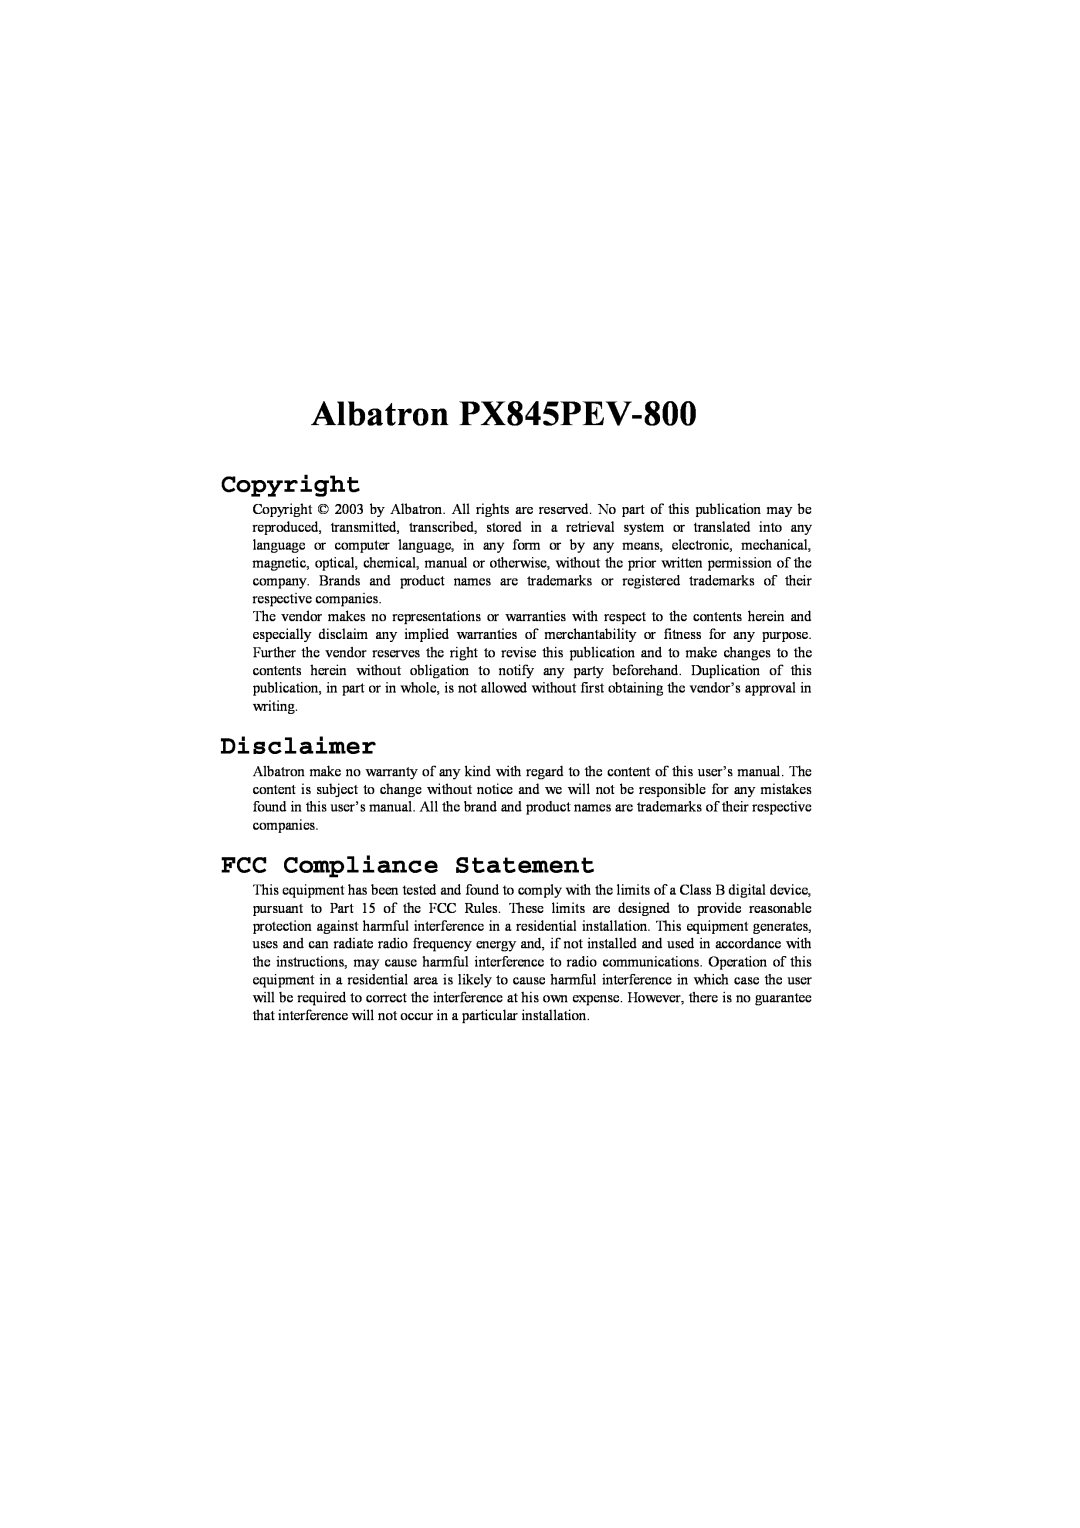 Albatron Technology manual Albatron PX845PEV-800, Copyright, Disclaimer, FCC Compliance Statement 